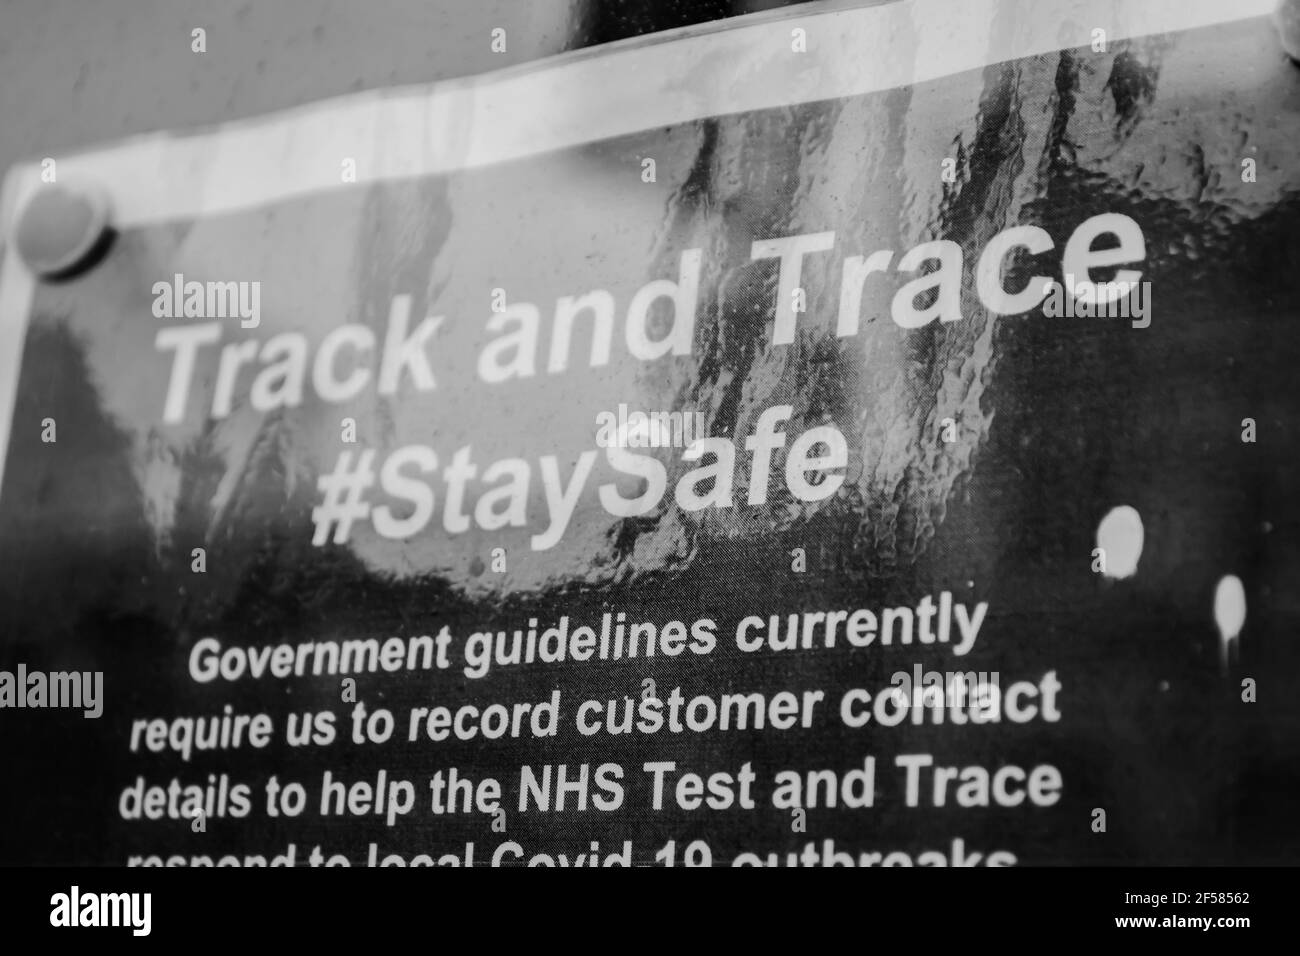 FULHAM, LONDON, ENGLAND- 17. Februar 2021: Track and Trace #StaySafe Poster in einem Schaufenster Stockfoto